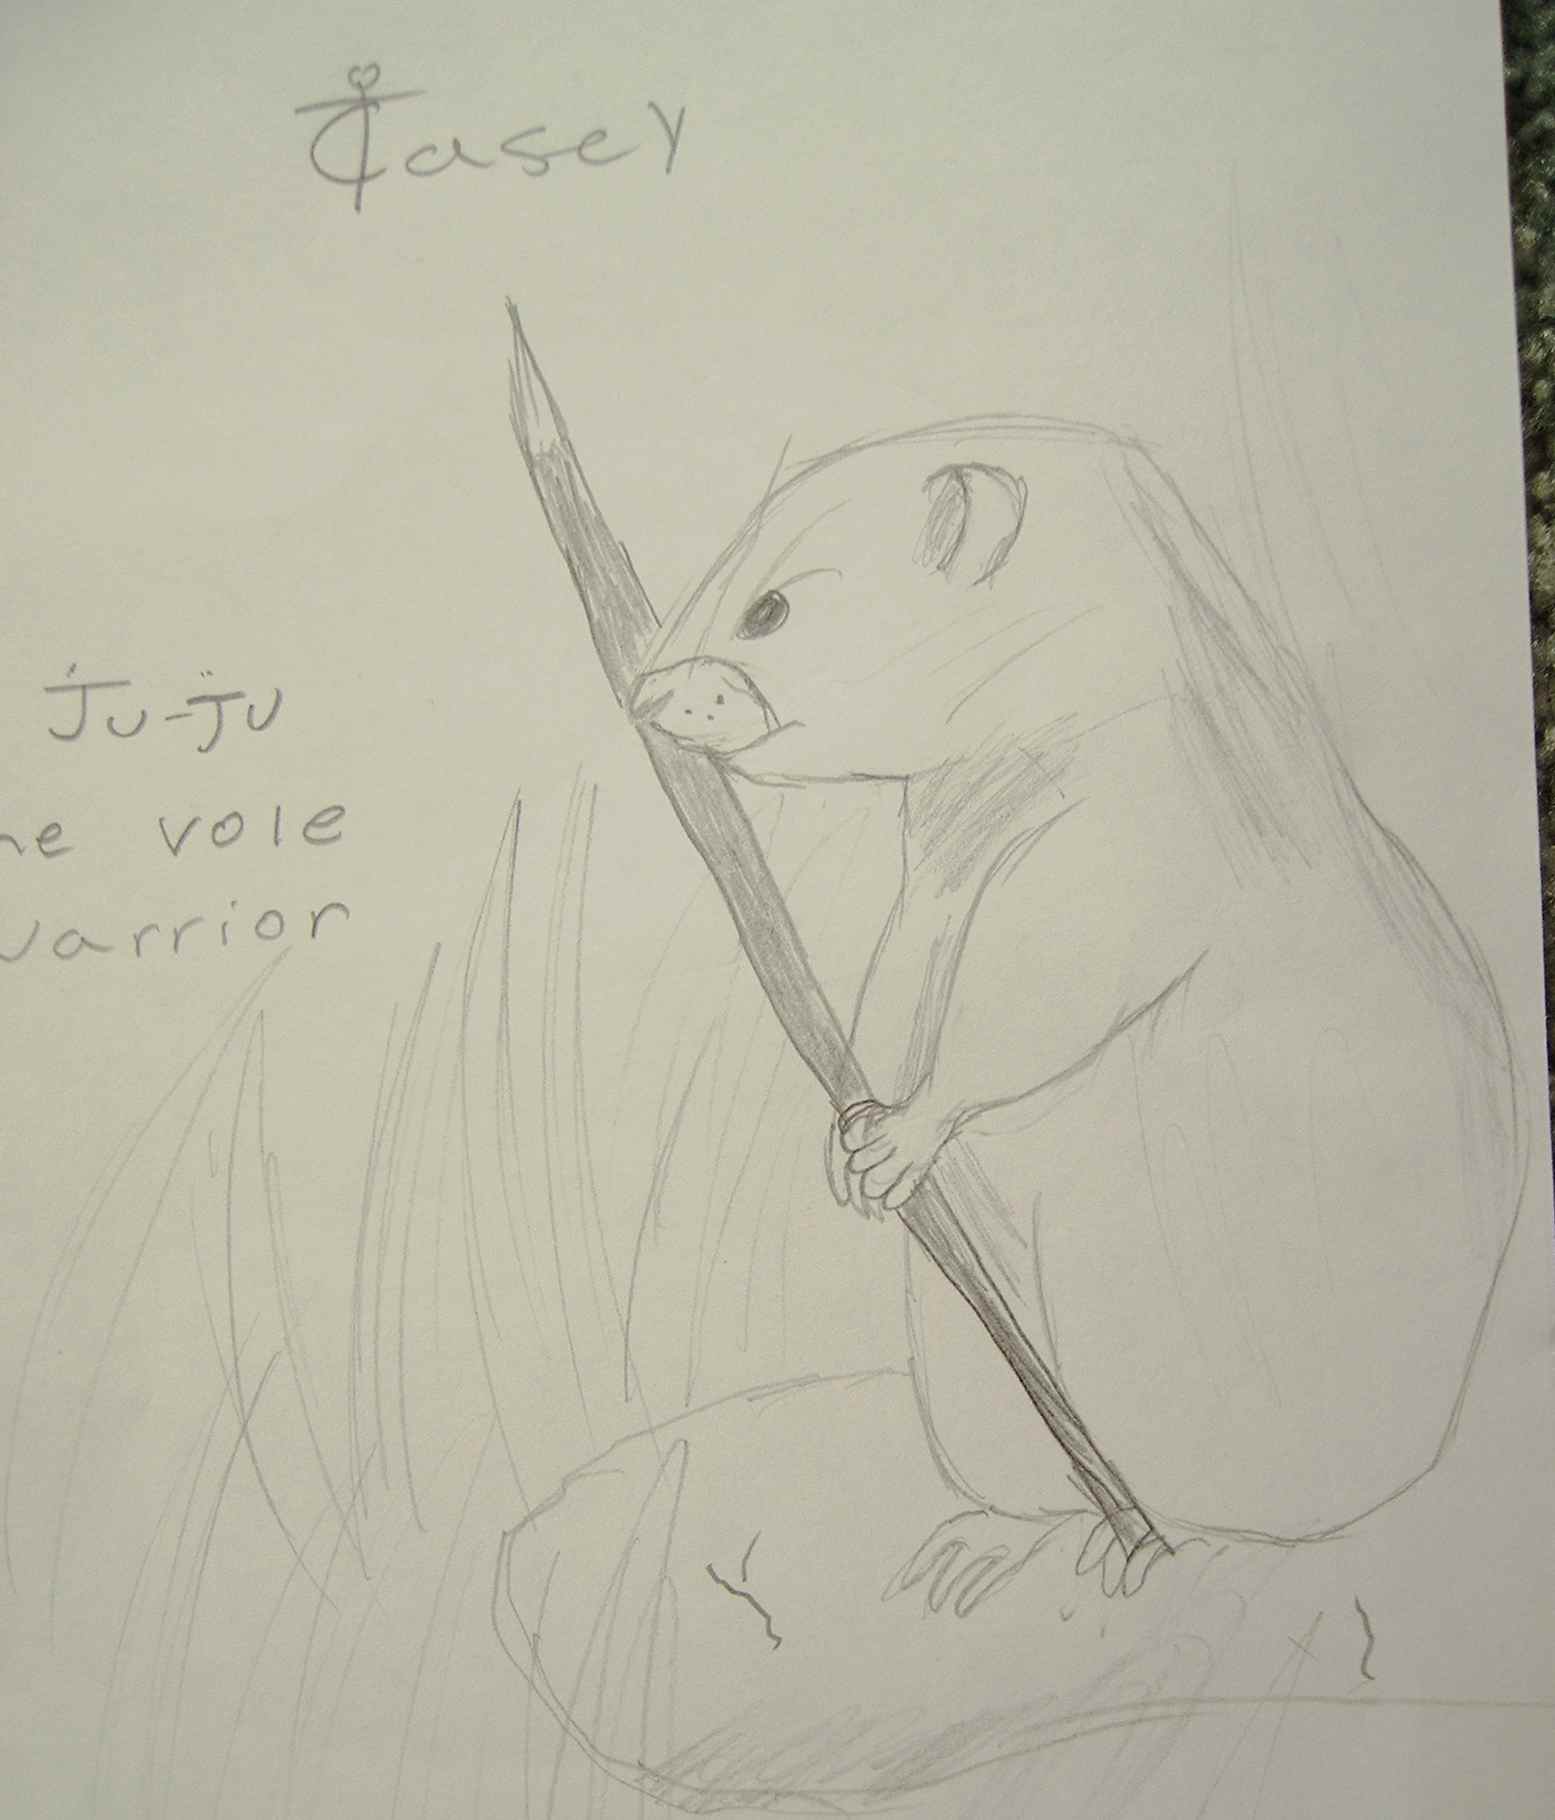 JuJu the Vole warrior by Tane